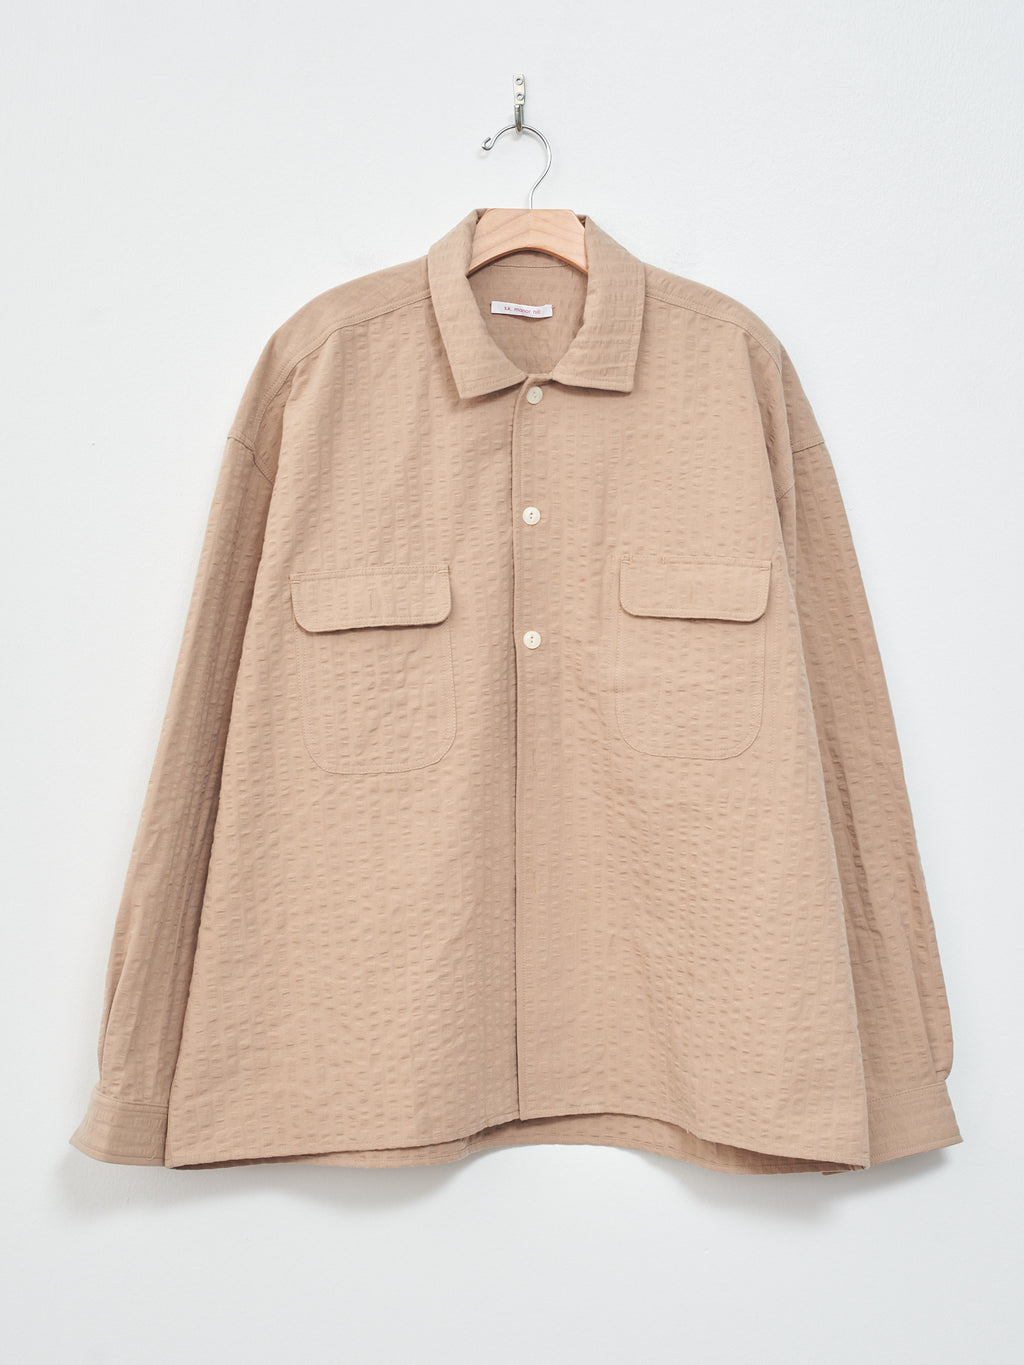 Namu Shop - S.K. Manor Hill Park Shirt Jacket - Tan Puckered Cotton